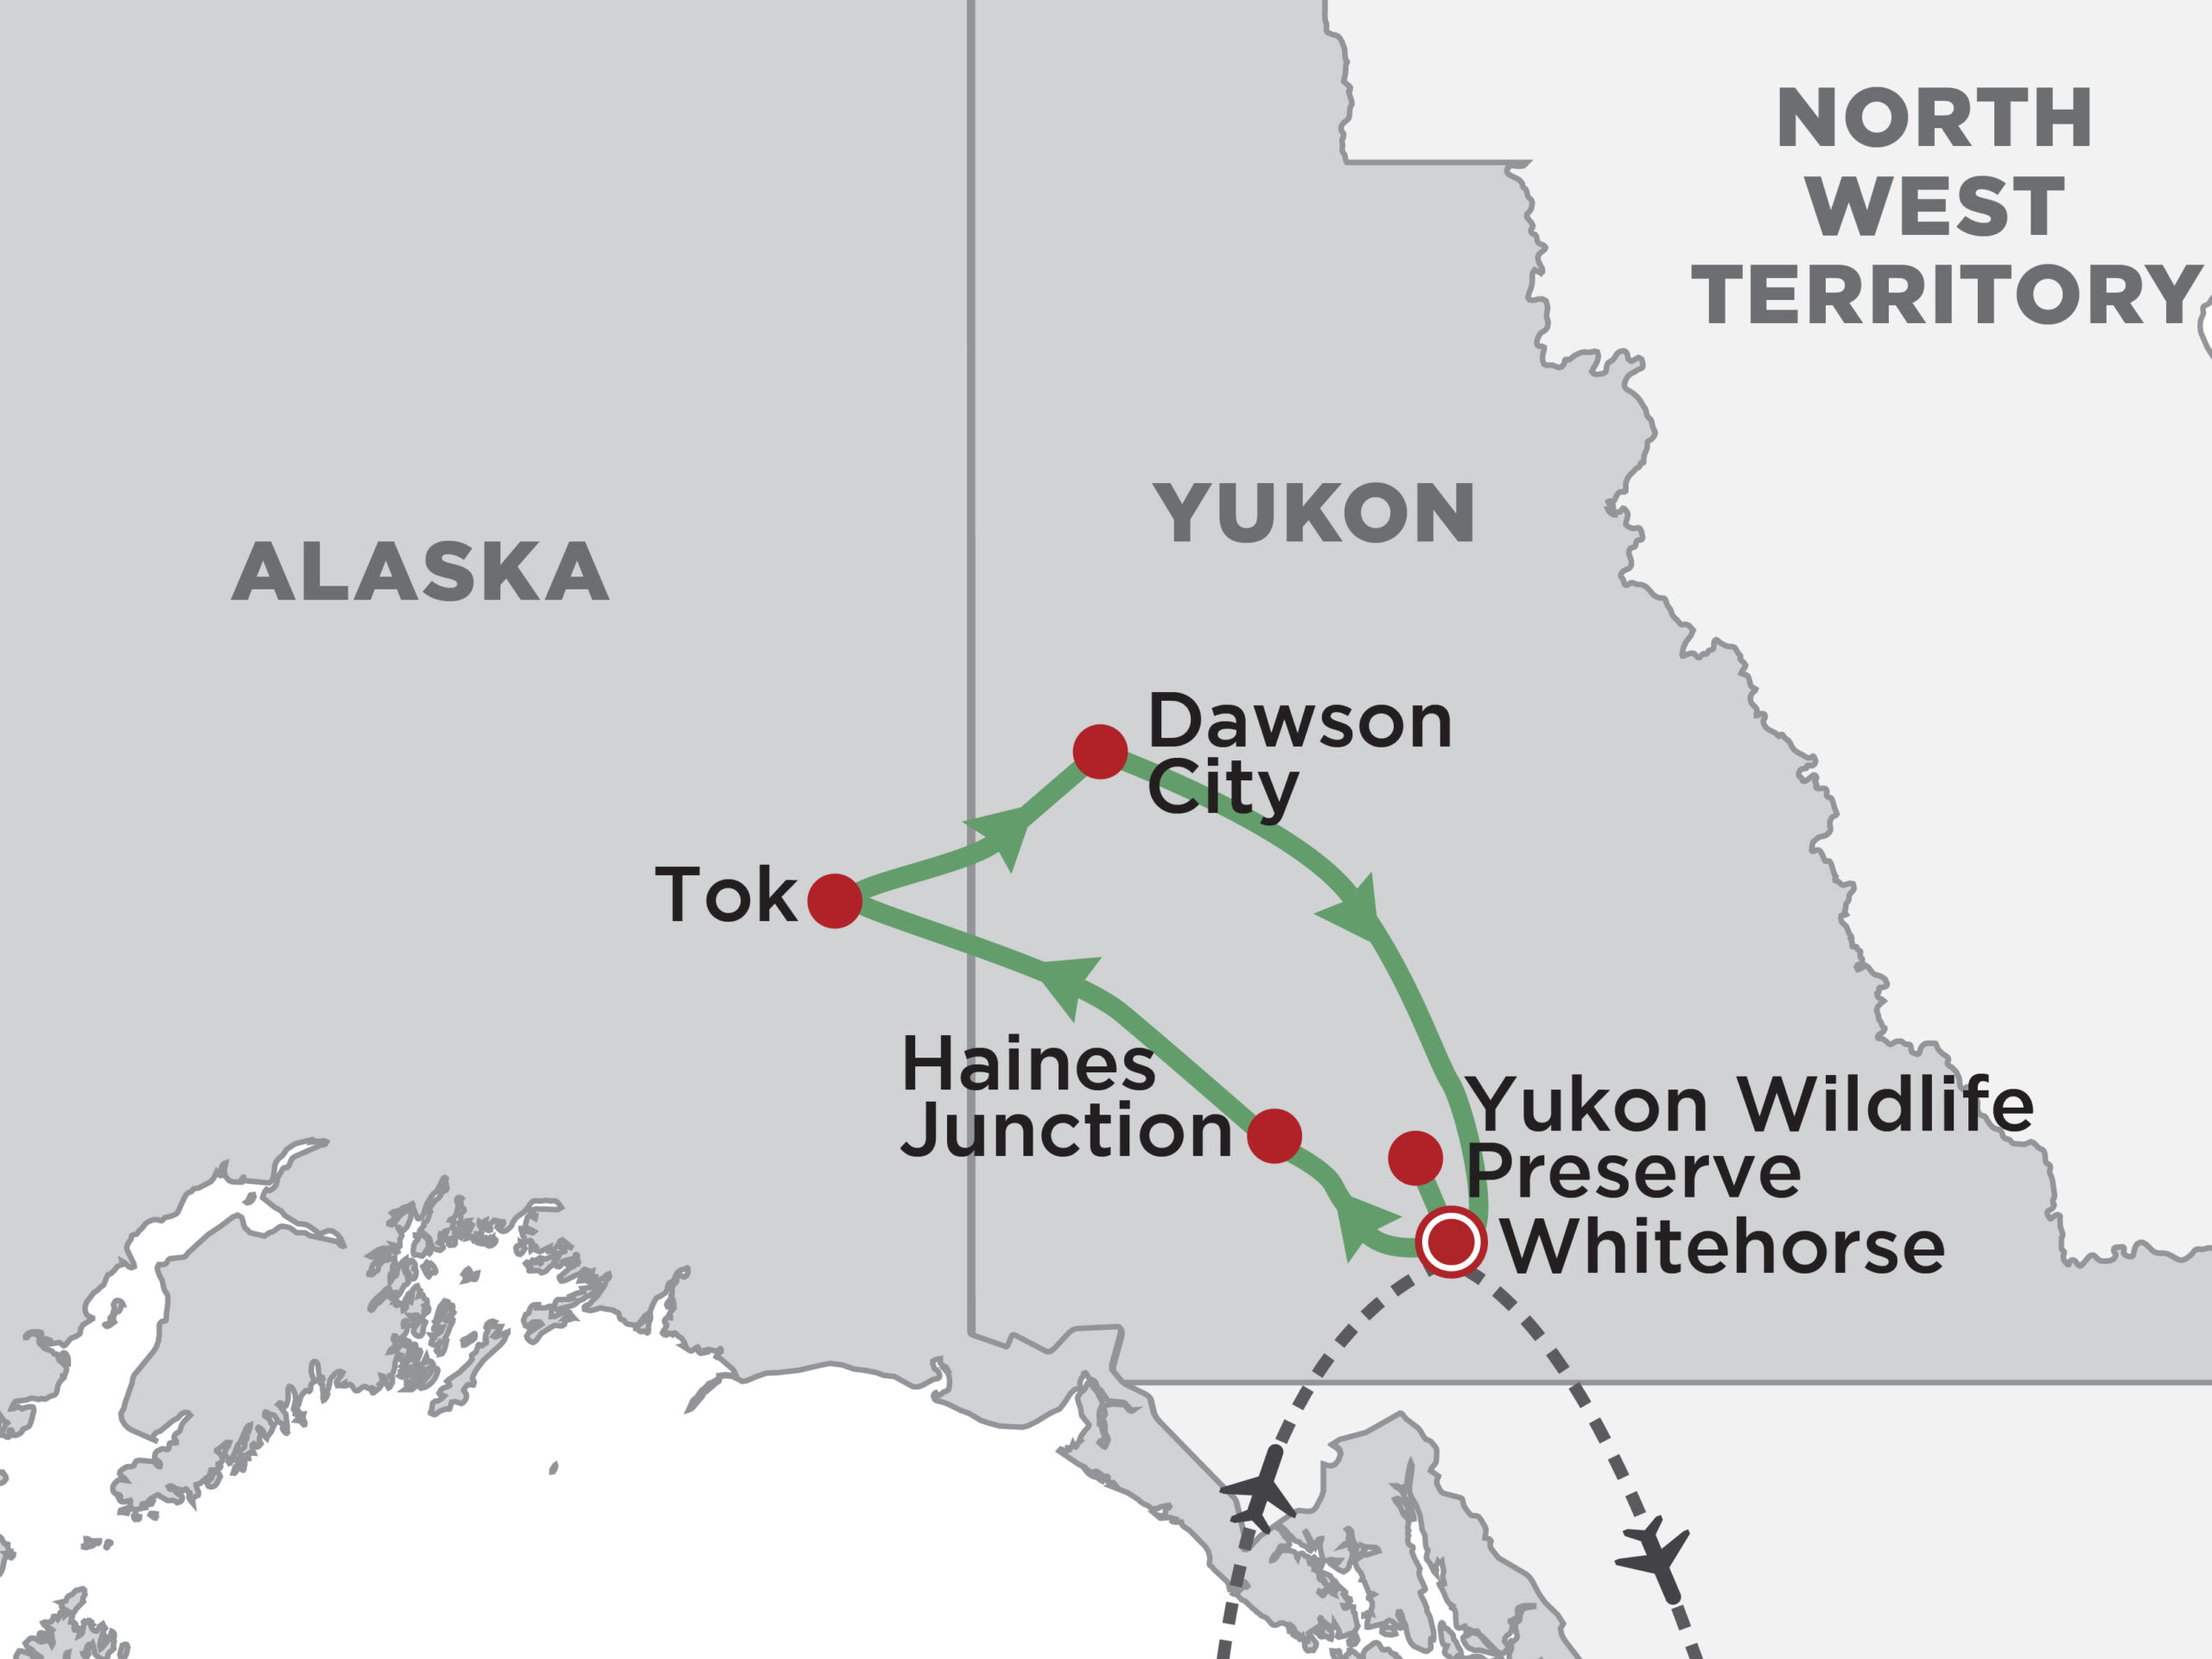 Highlights of the Yukon